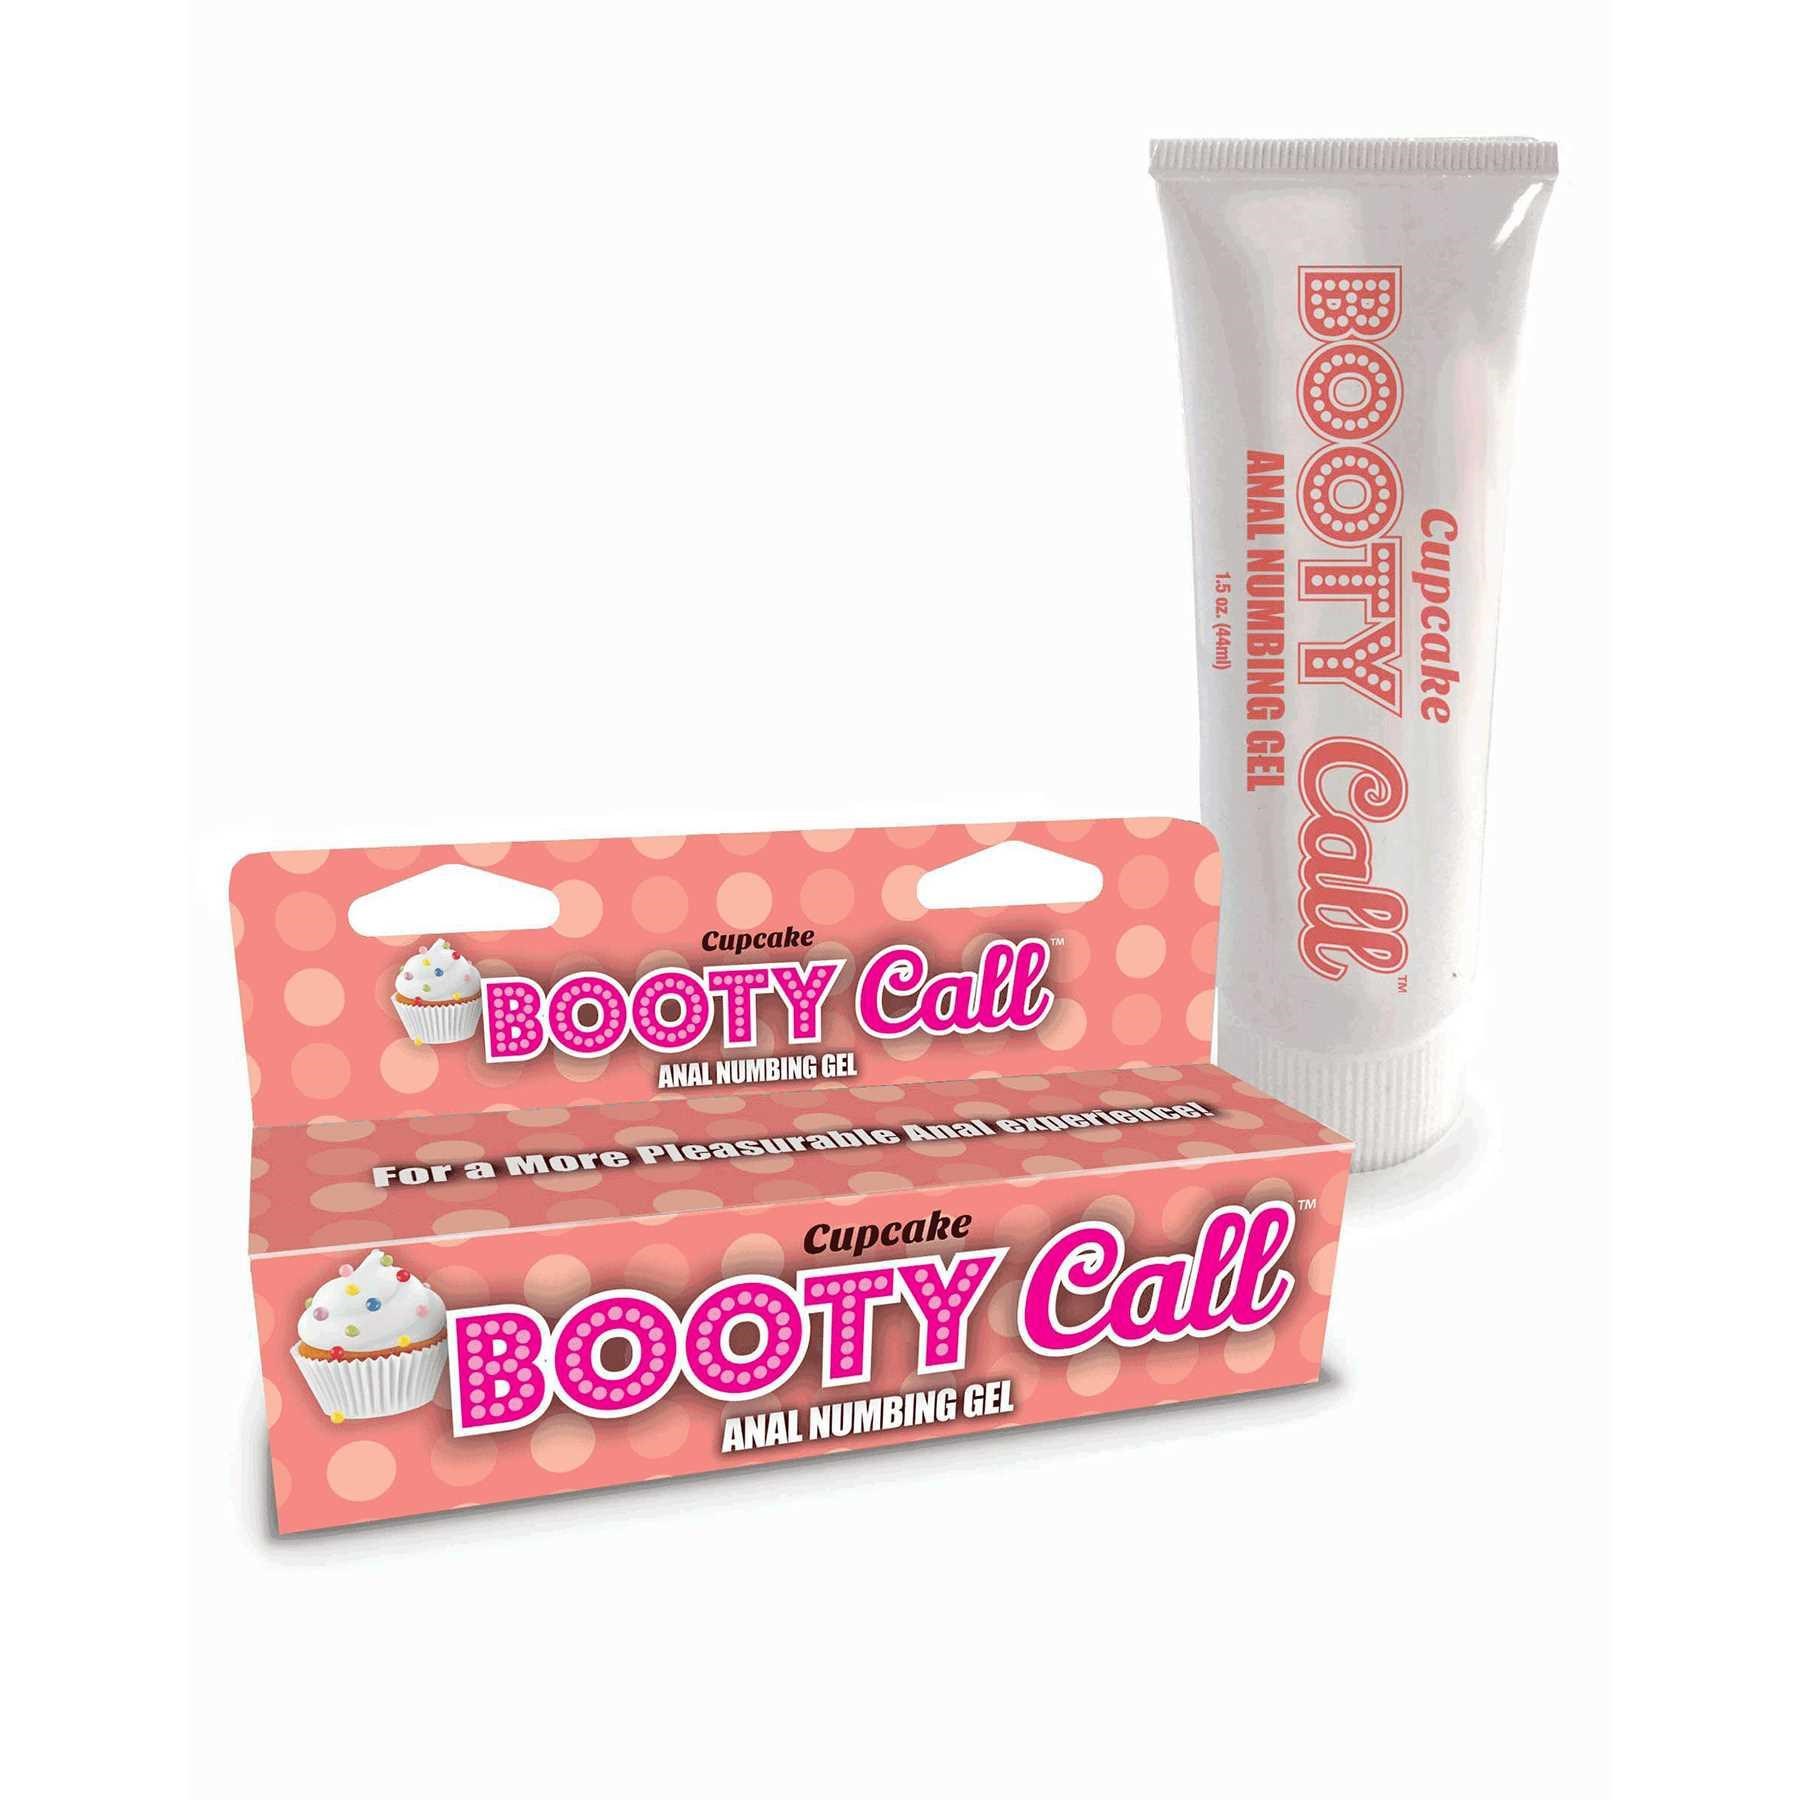 Booty Call Anal Numbing Gel – Cupcake box & tube